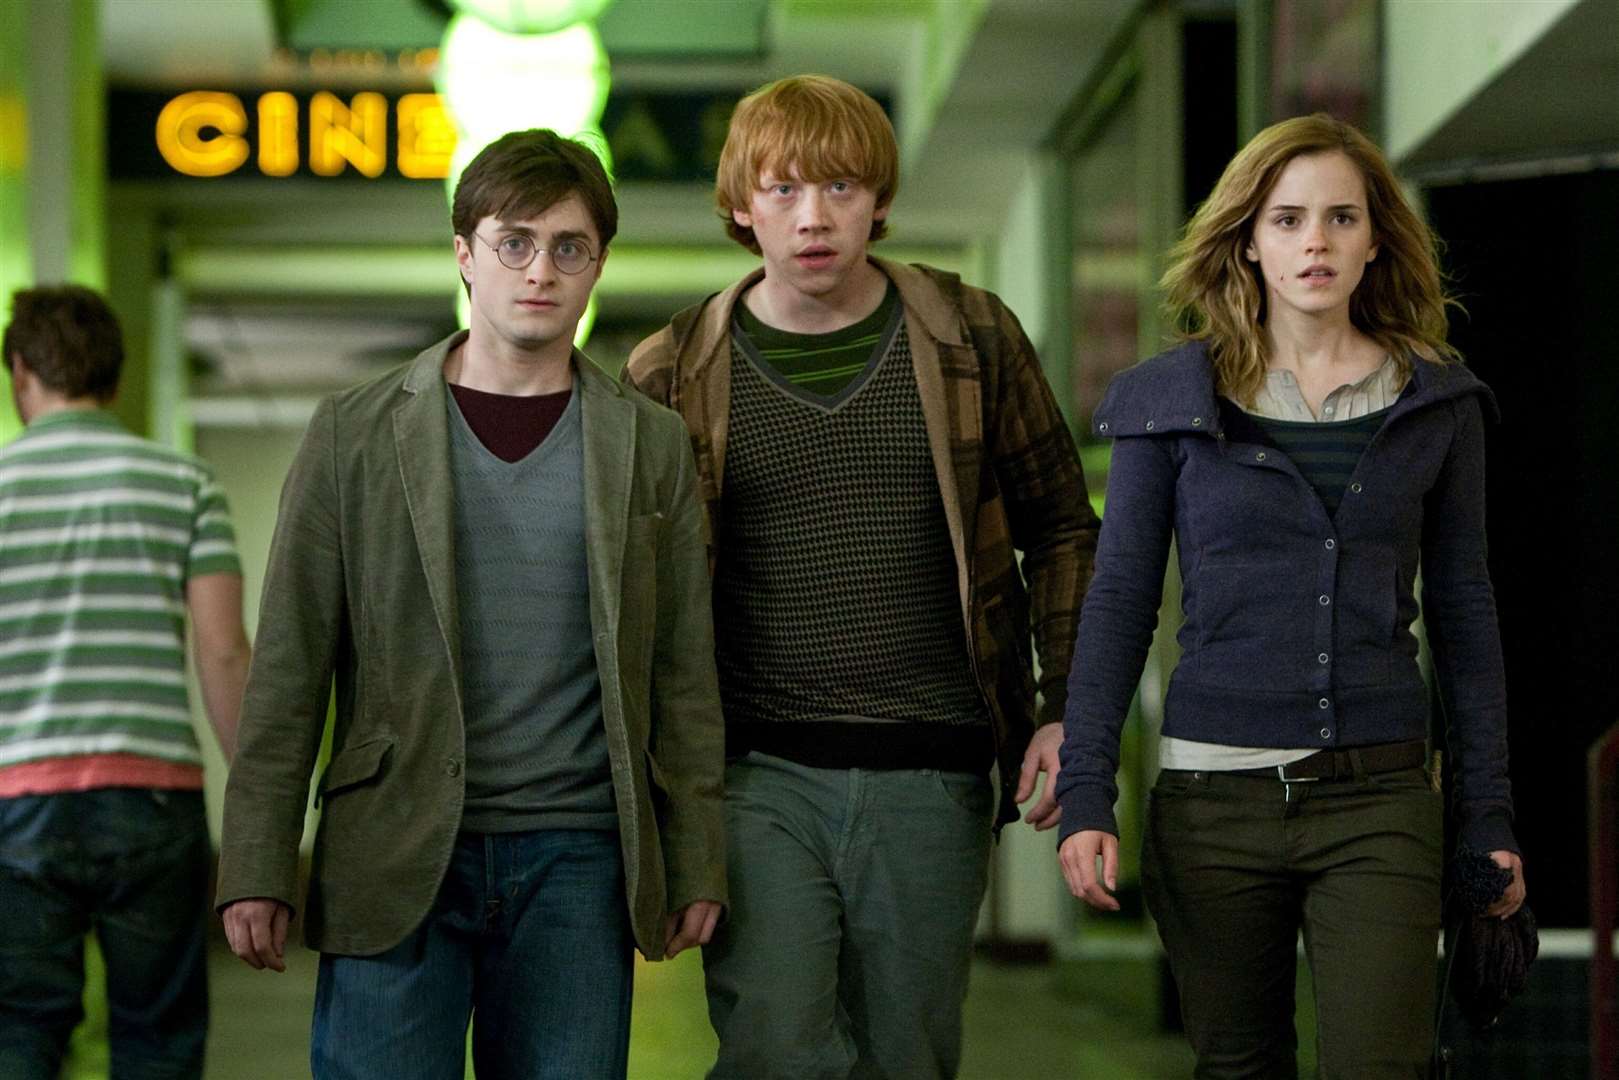 Daniel Radcliffe as Harry Potter, alongside Rupert Grint as Ron and Emma Watson as Hermione. Photo by Jaap Buitendijk courtesy of Warner Bros Entertainment.